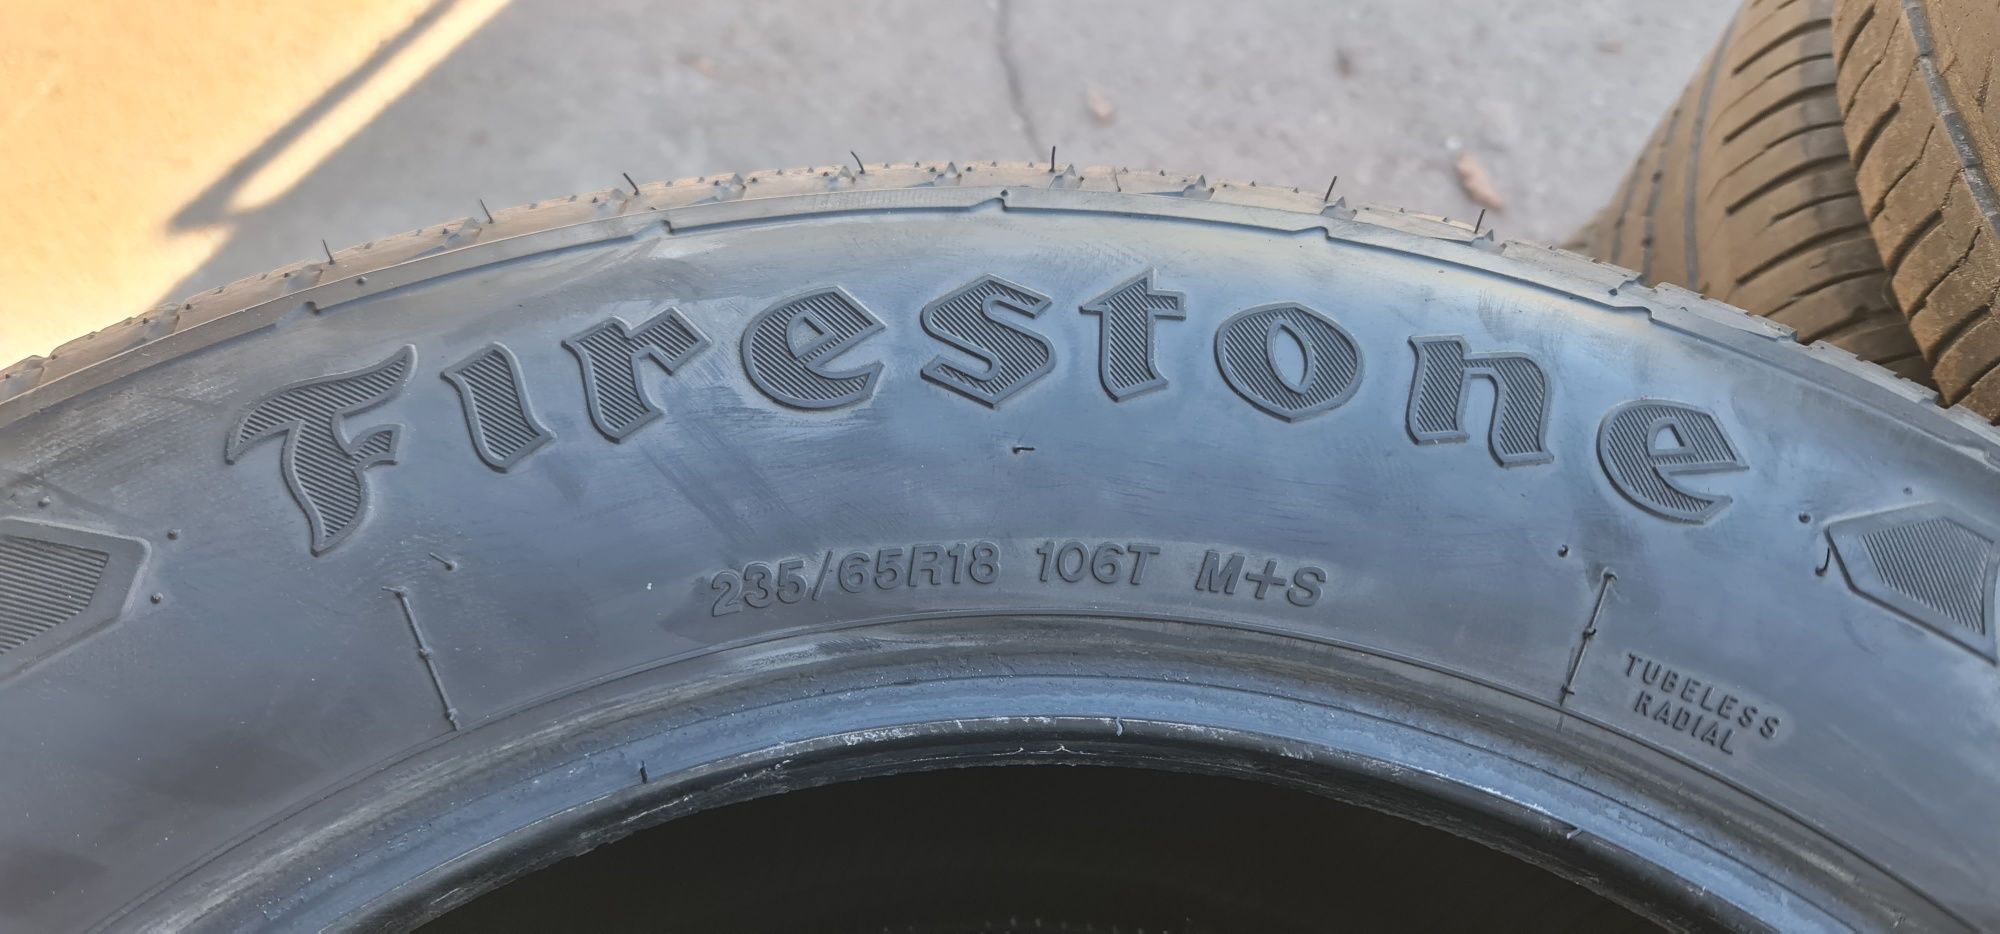 Шини Зимова гума 235/65 r18 Firestone Зимние шины резина